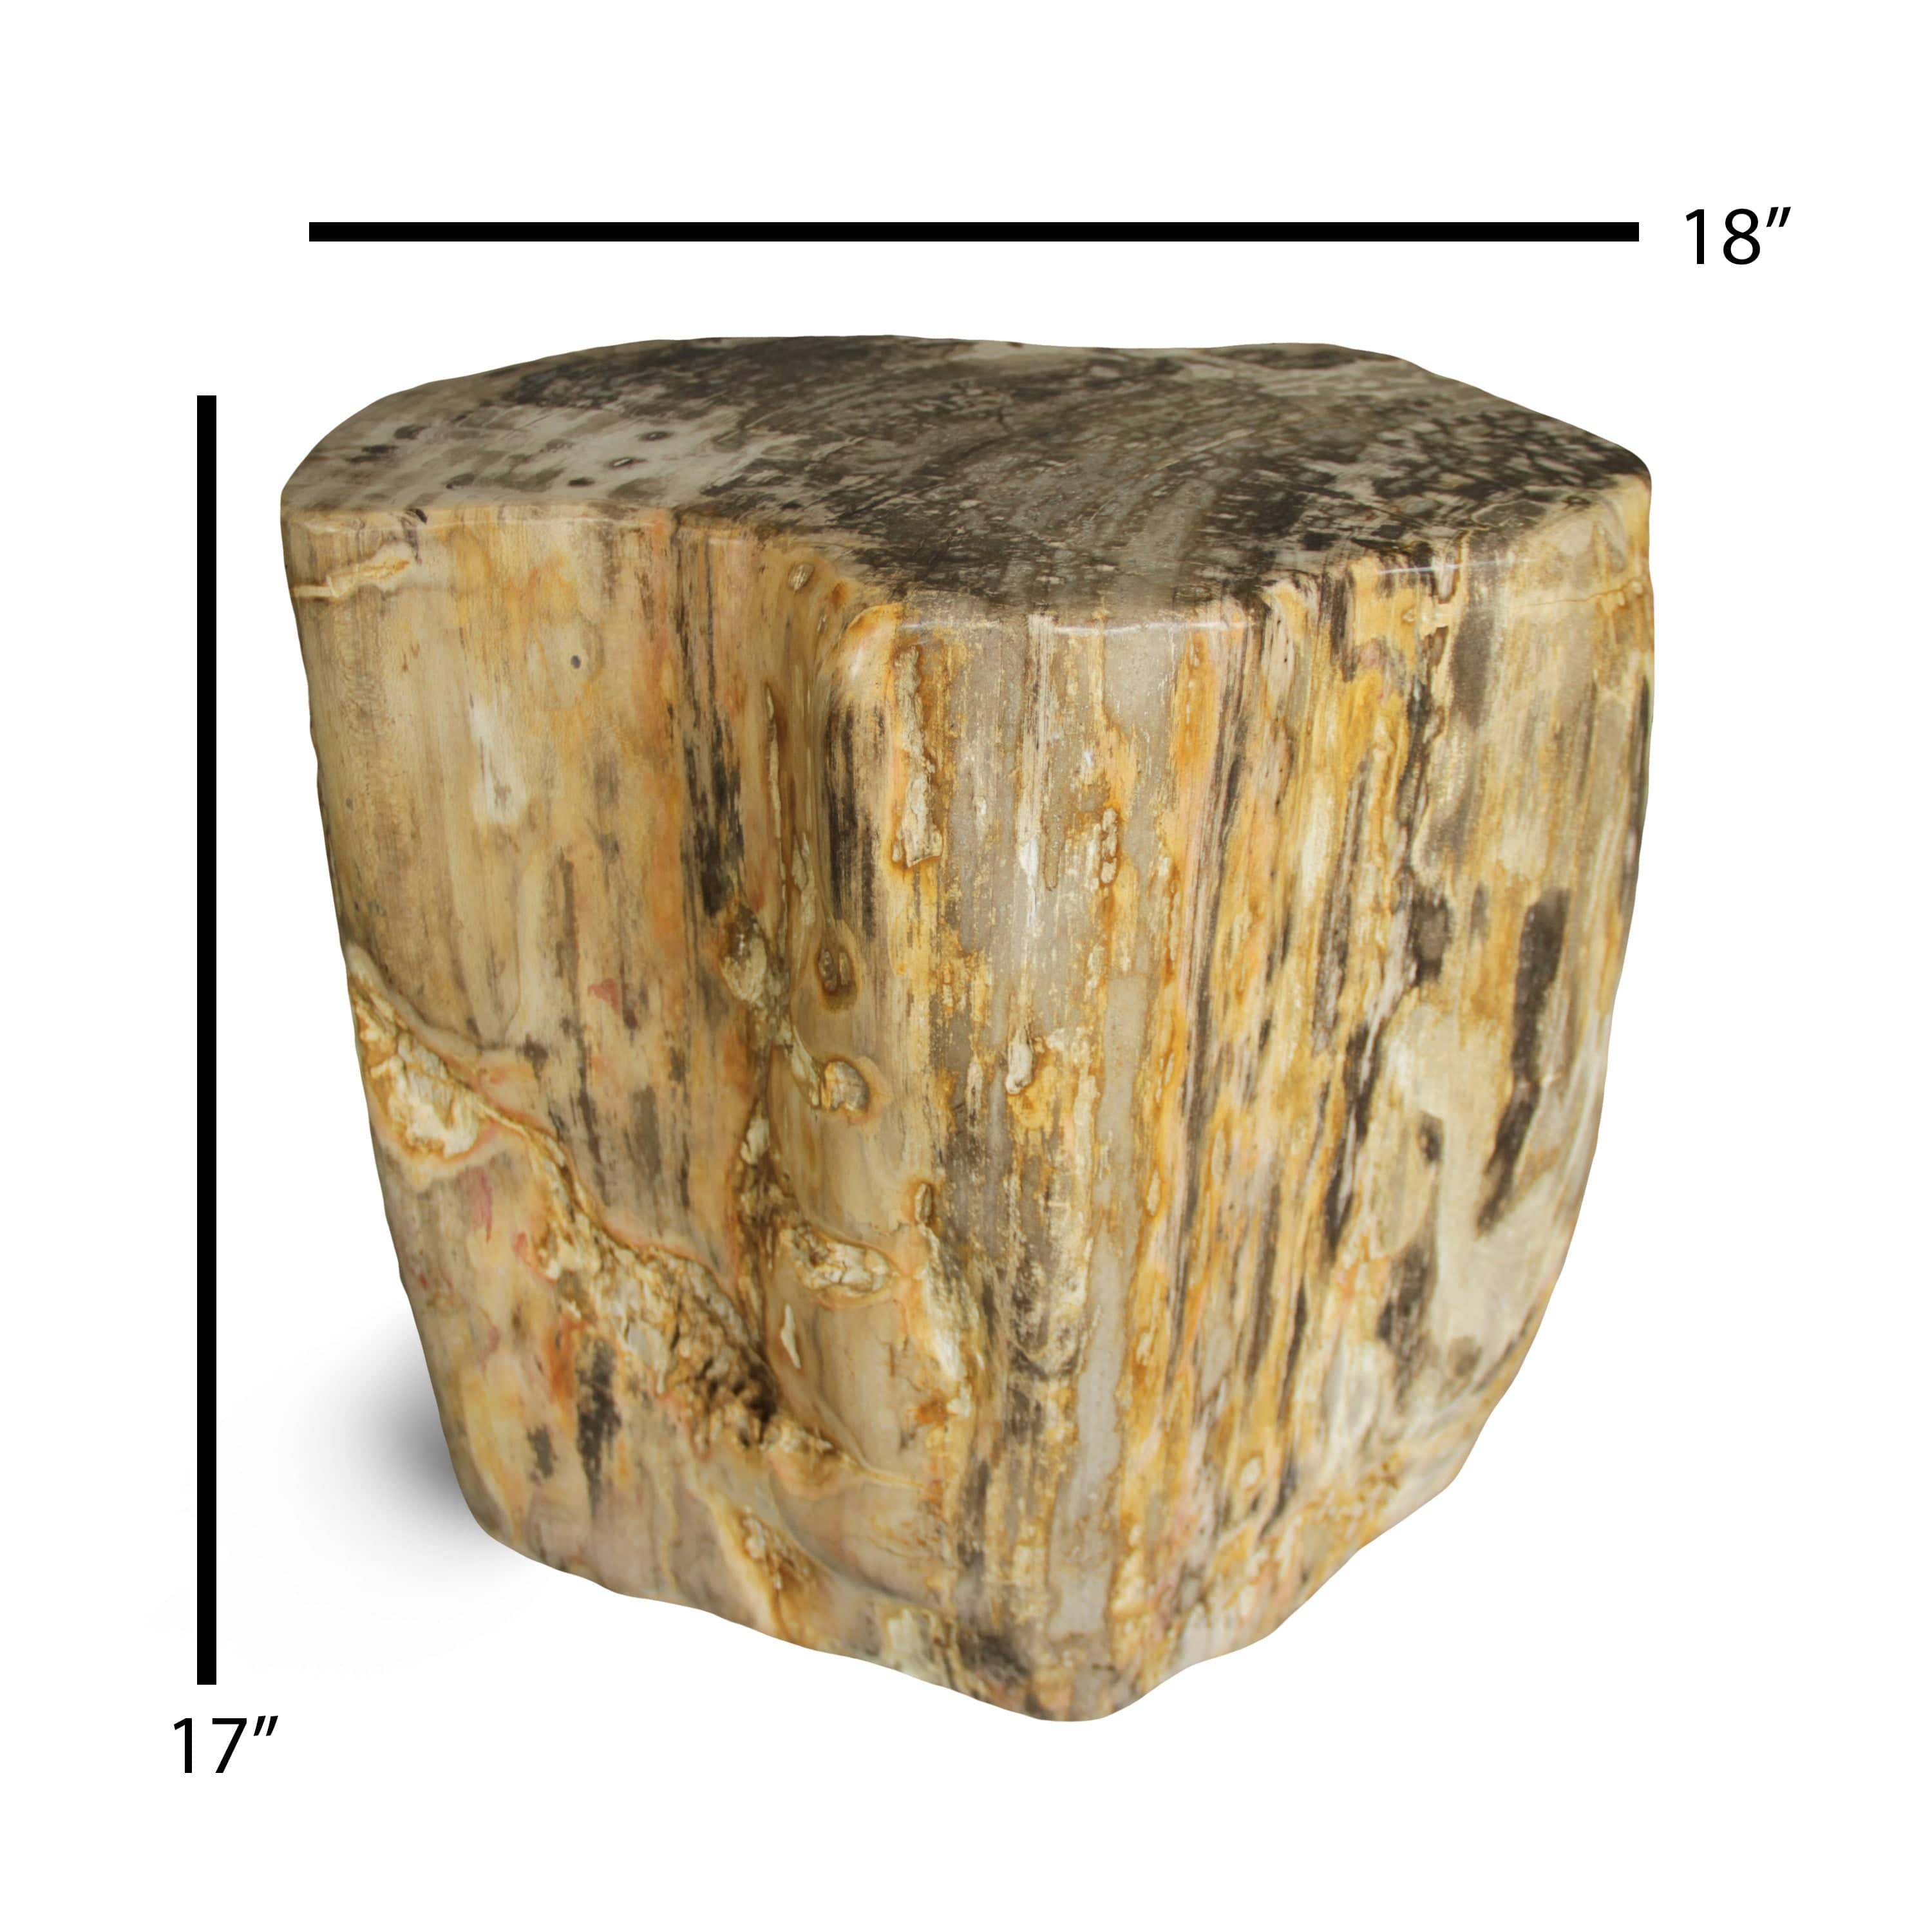 Kalifano Petrified Wood Petrified Wood Round Stump / Stool from Indonesia - 18" / 286 lbs PWS5200.003